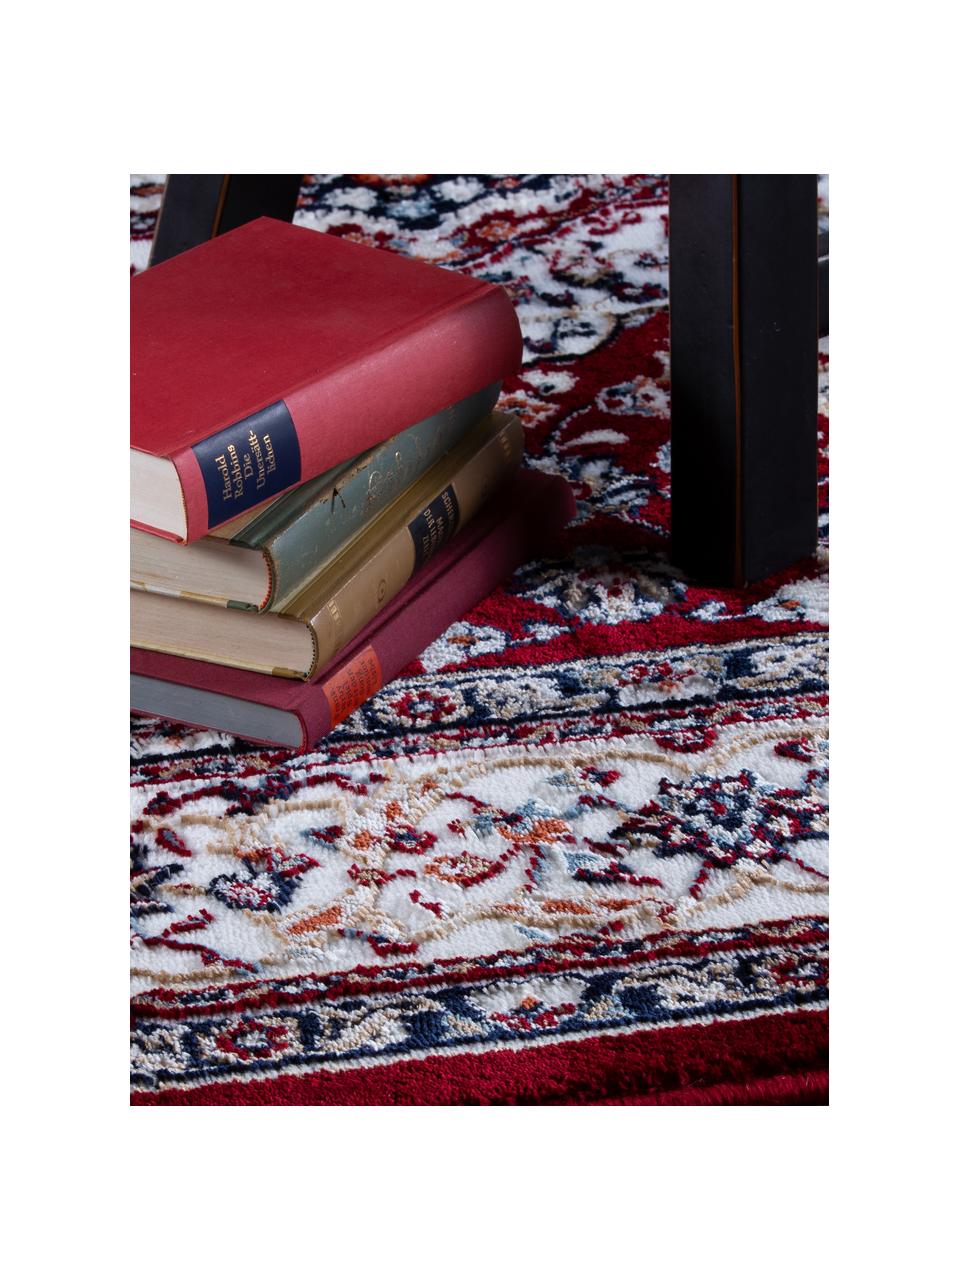 Vloerkleed met patroon Isfahan in donkerrood in oosterse stijl, 100% polyester, Donkerrood, multicolour, B 80 x L 150 cm (maat XS)